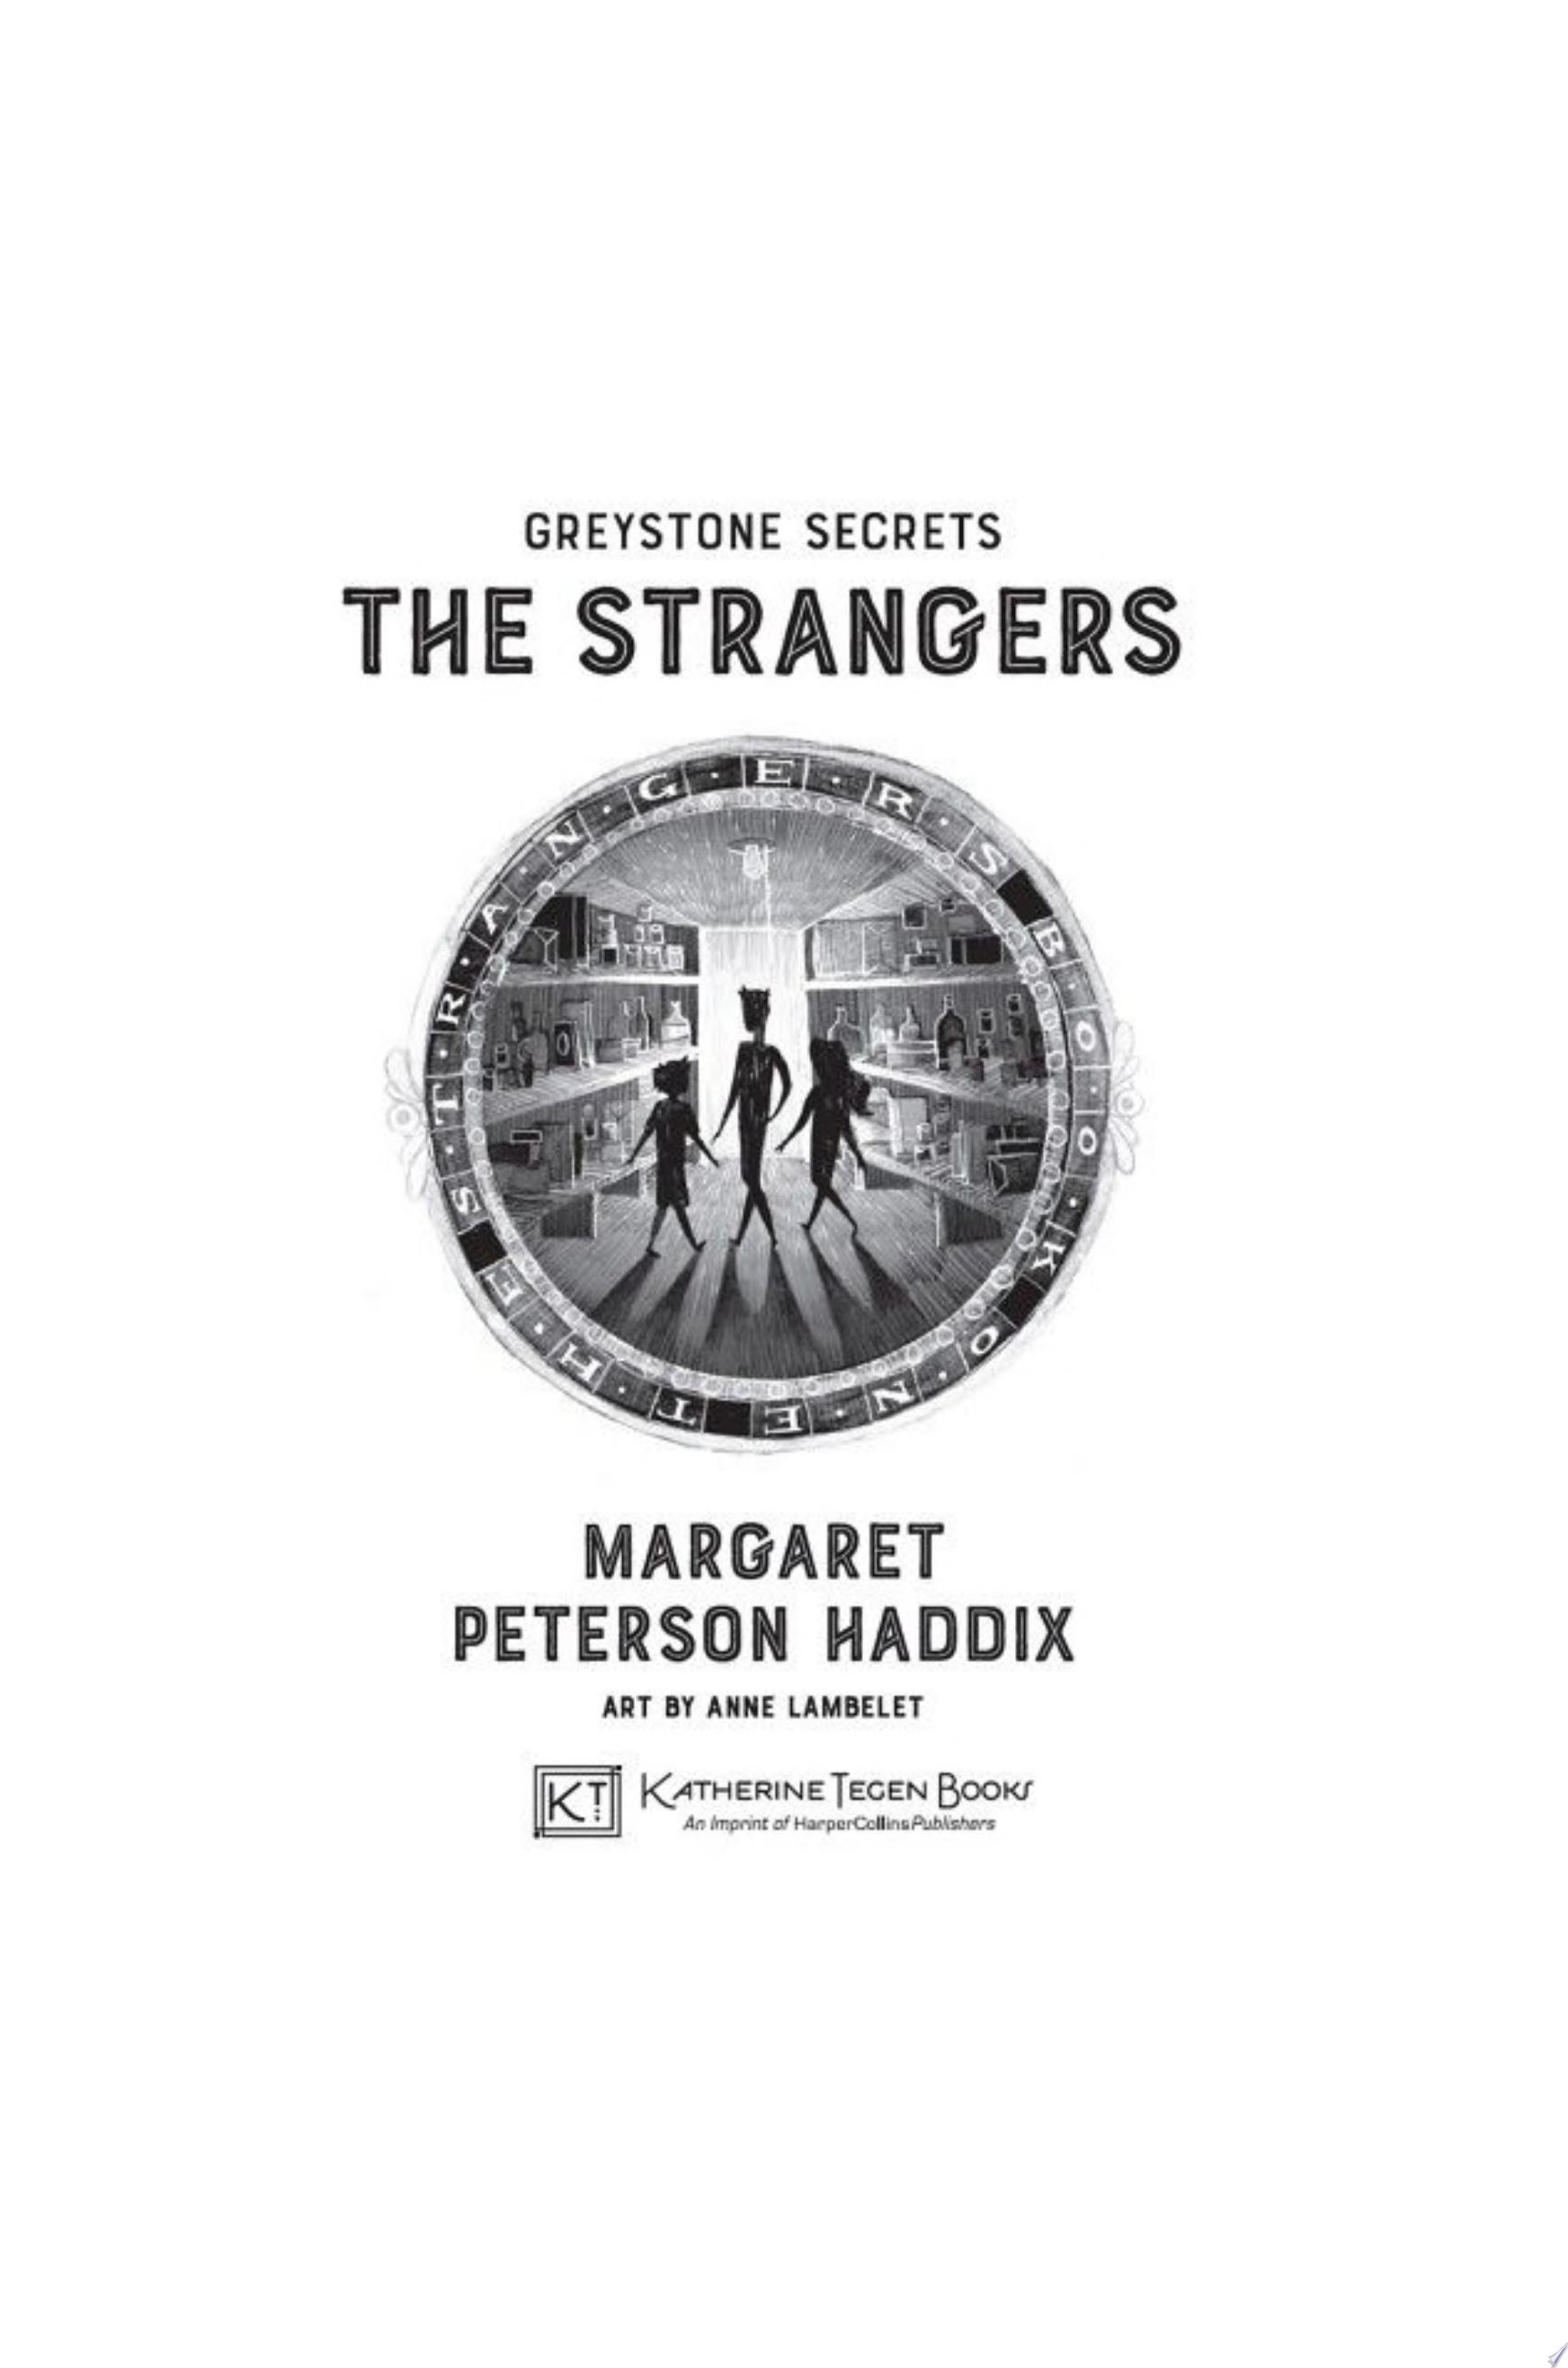 Image for "Greystone Secrets #1: The Strangers"